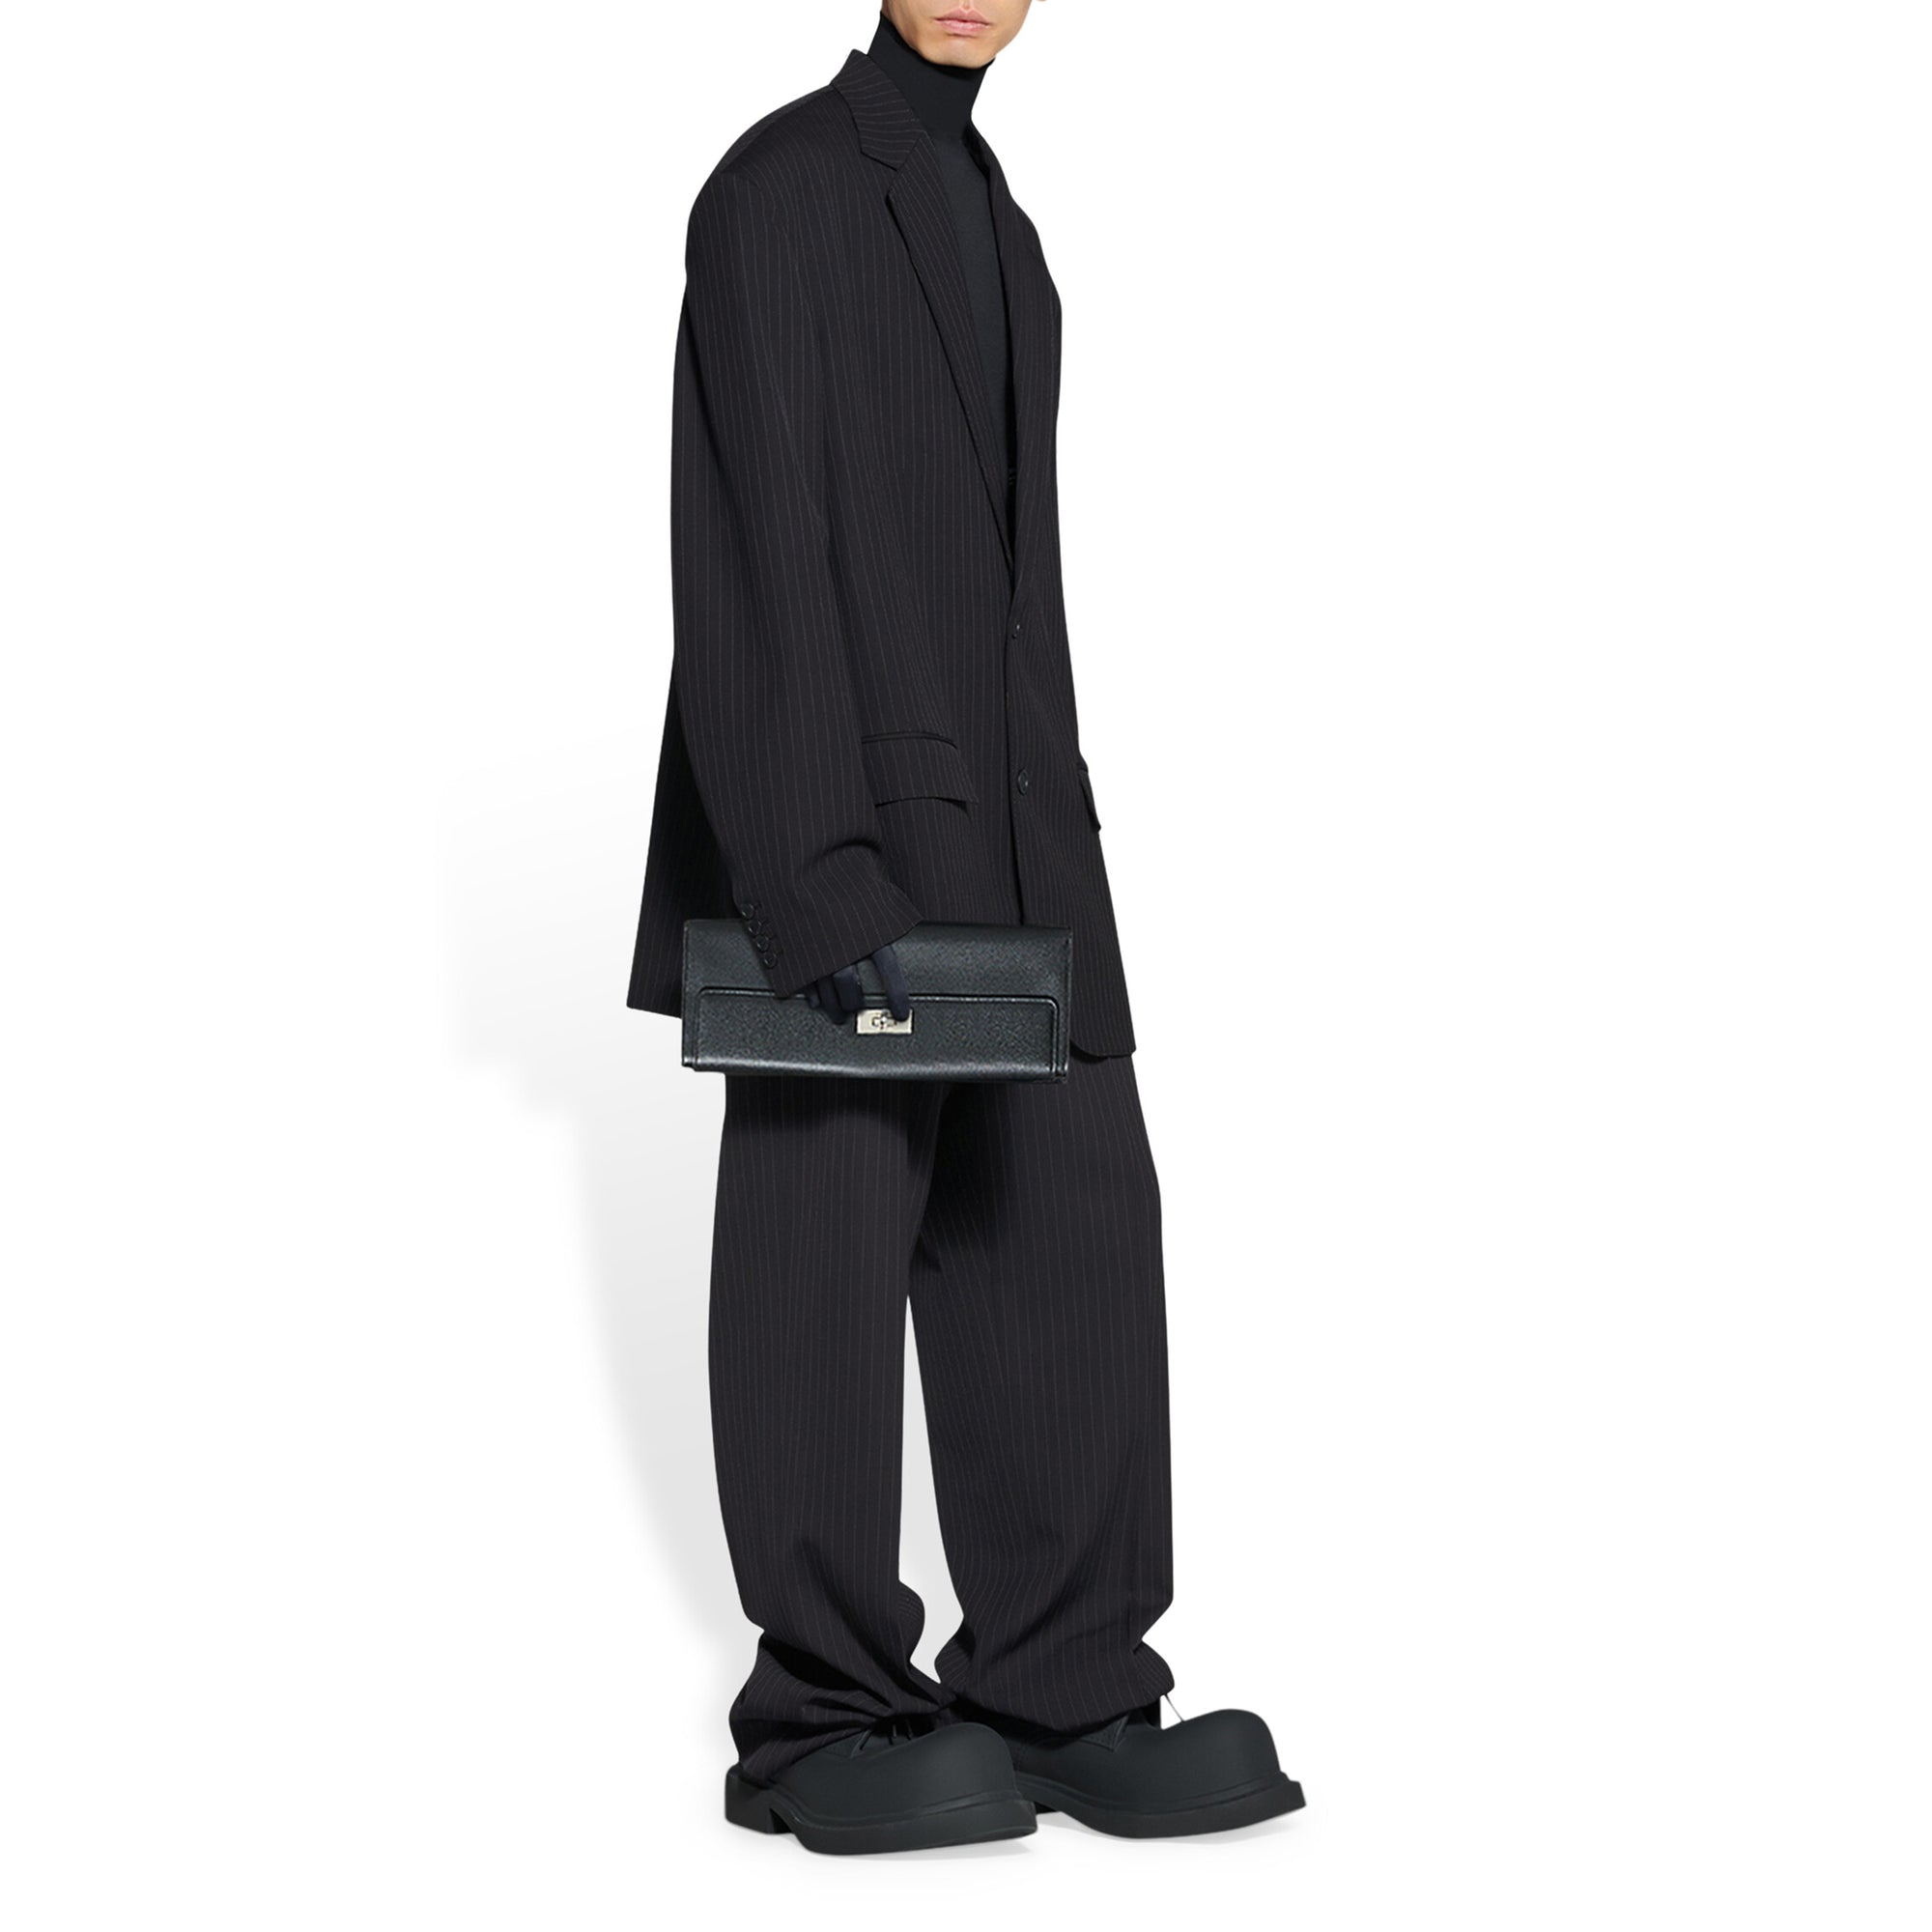 Balenciaga - Men’s Oversized Jacket - (Black/White)